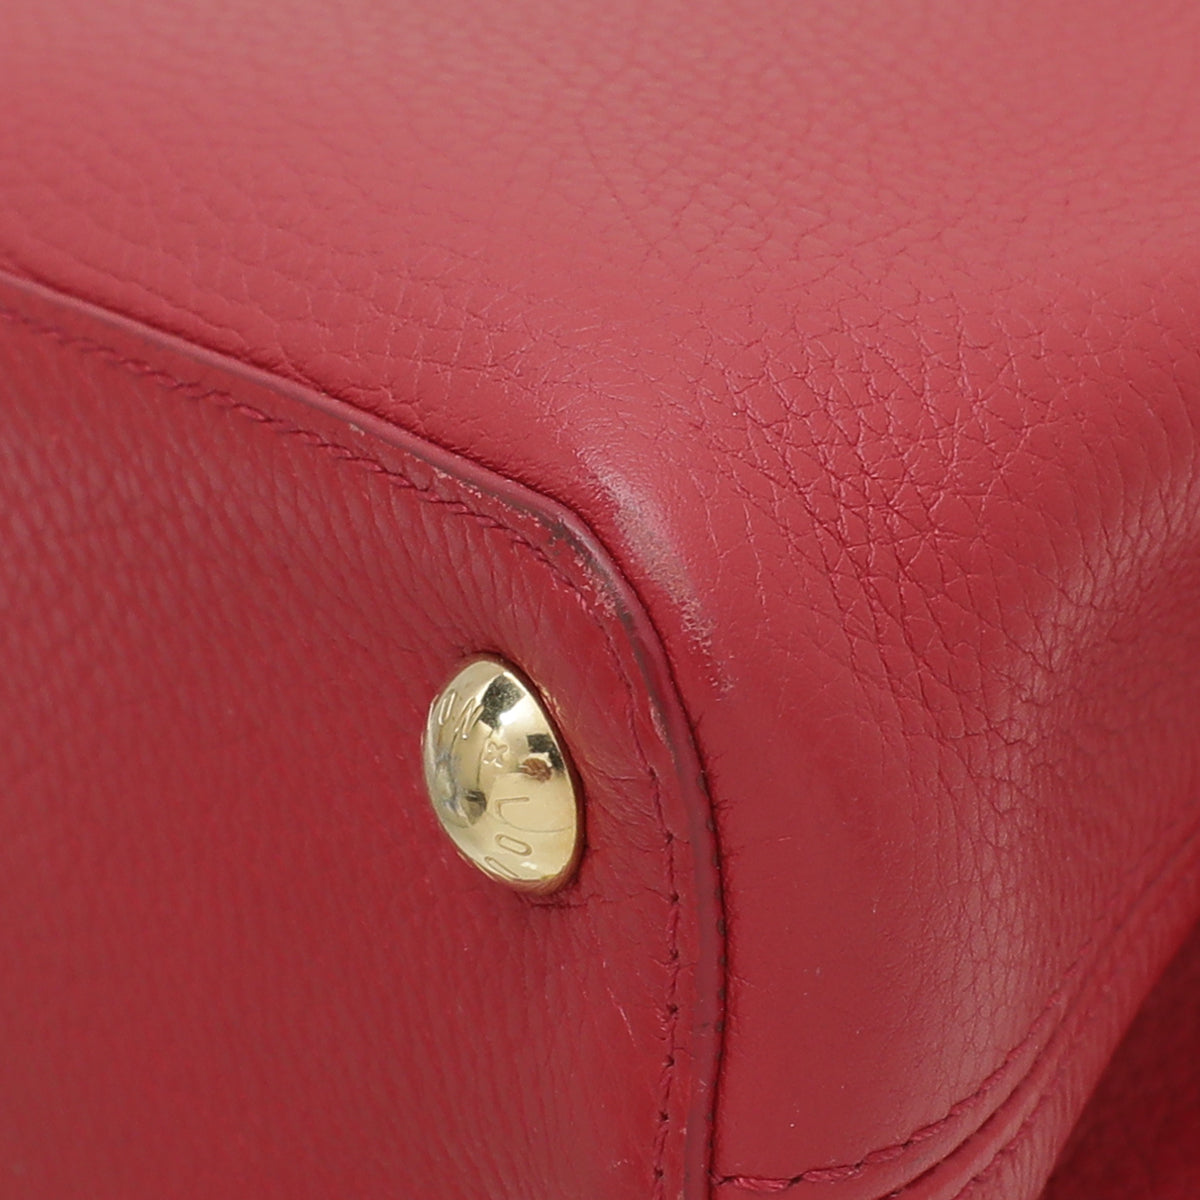 ❌SOLD❌ Louis Vuitton red Capucines BB Python bag